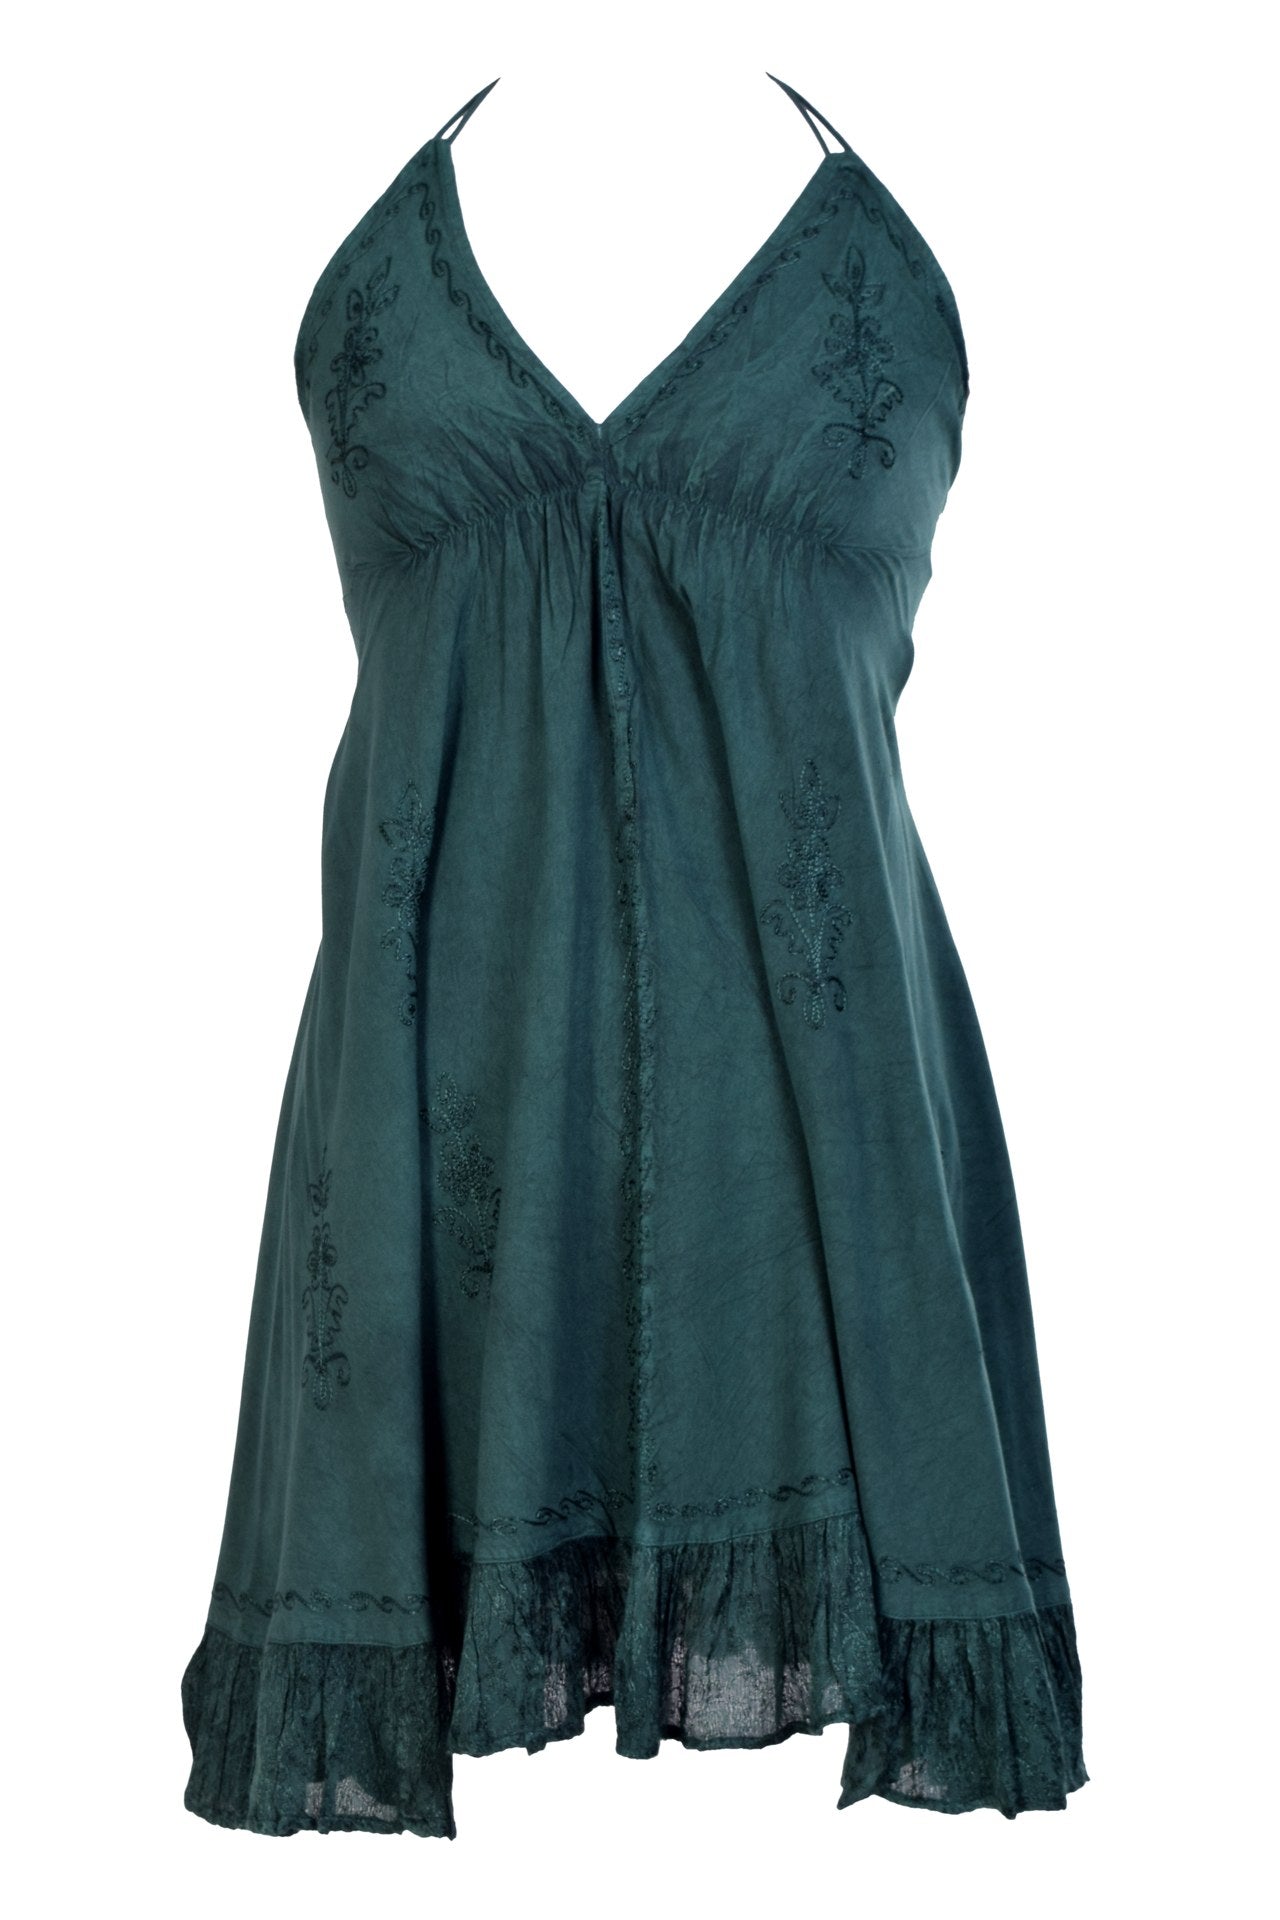 Halter Top Mid-Length Renaissance Dress 161115